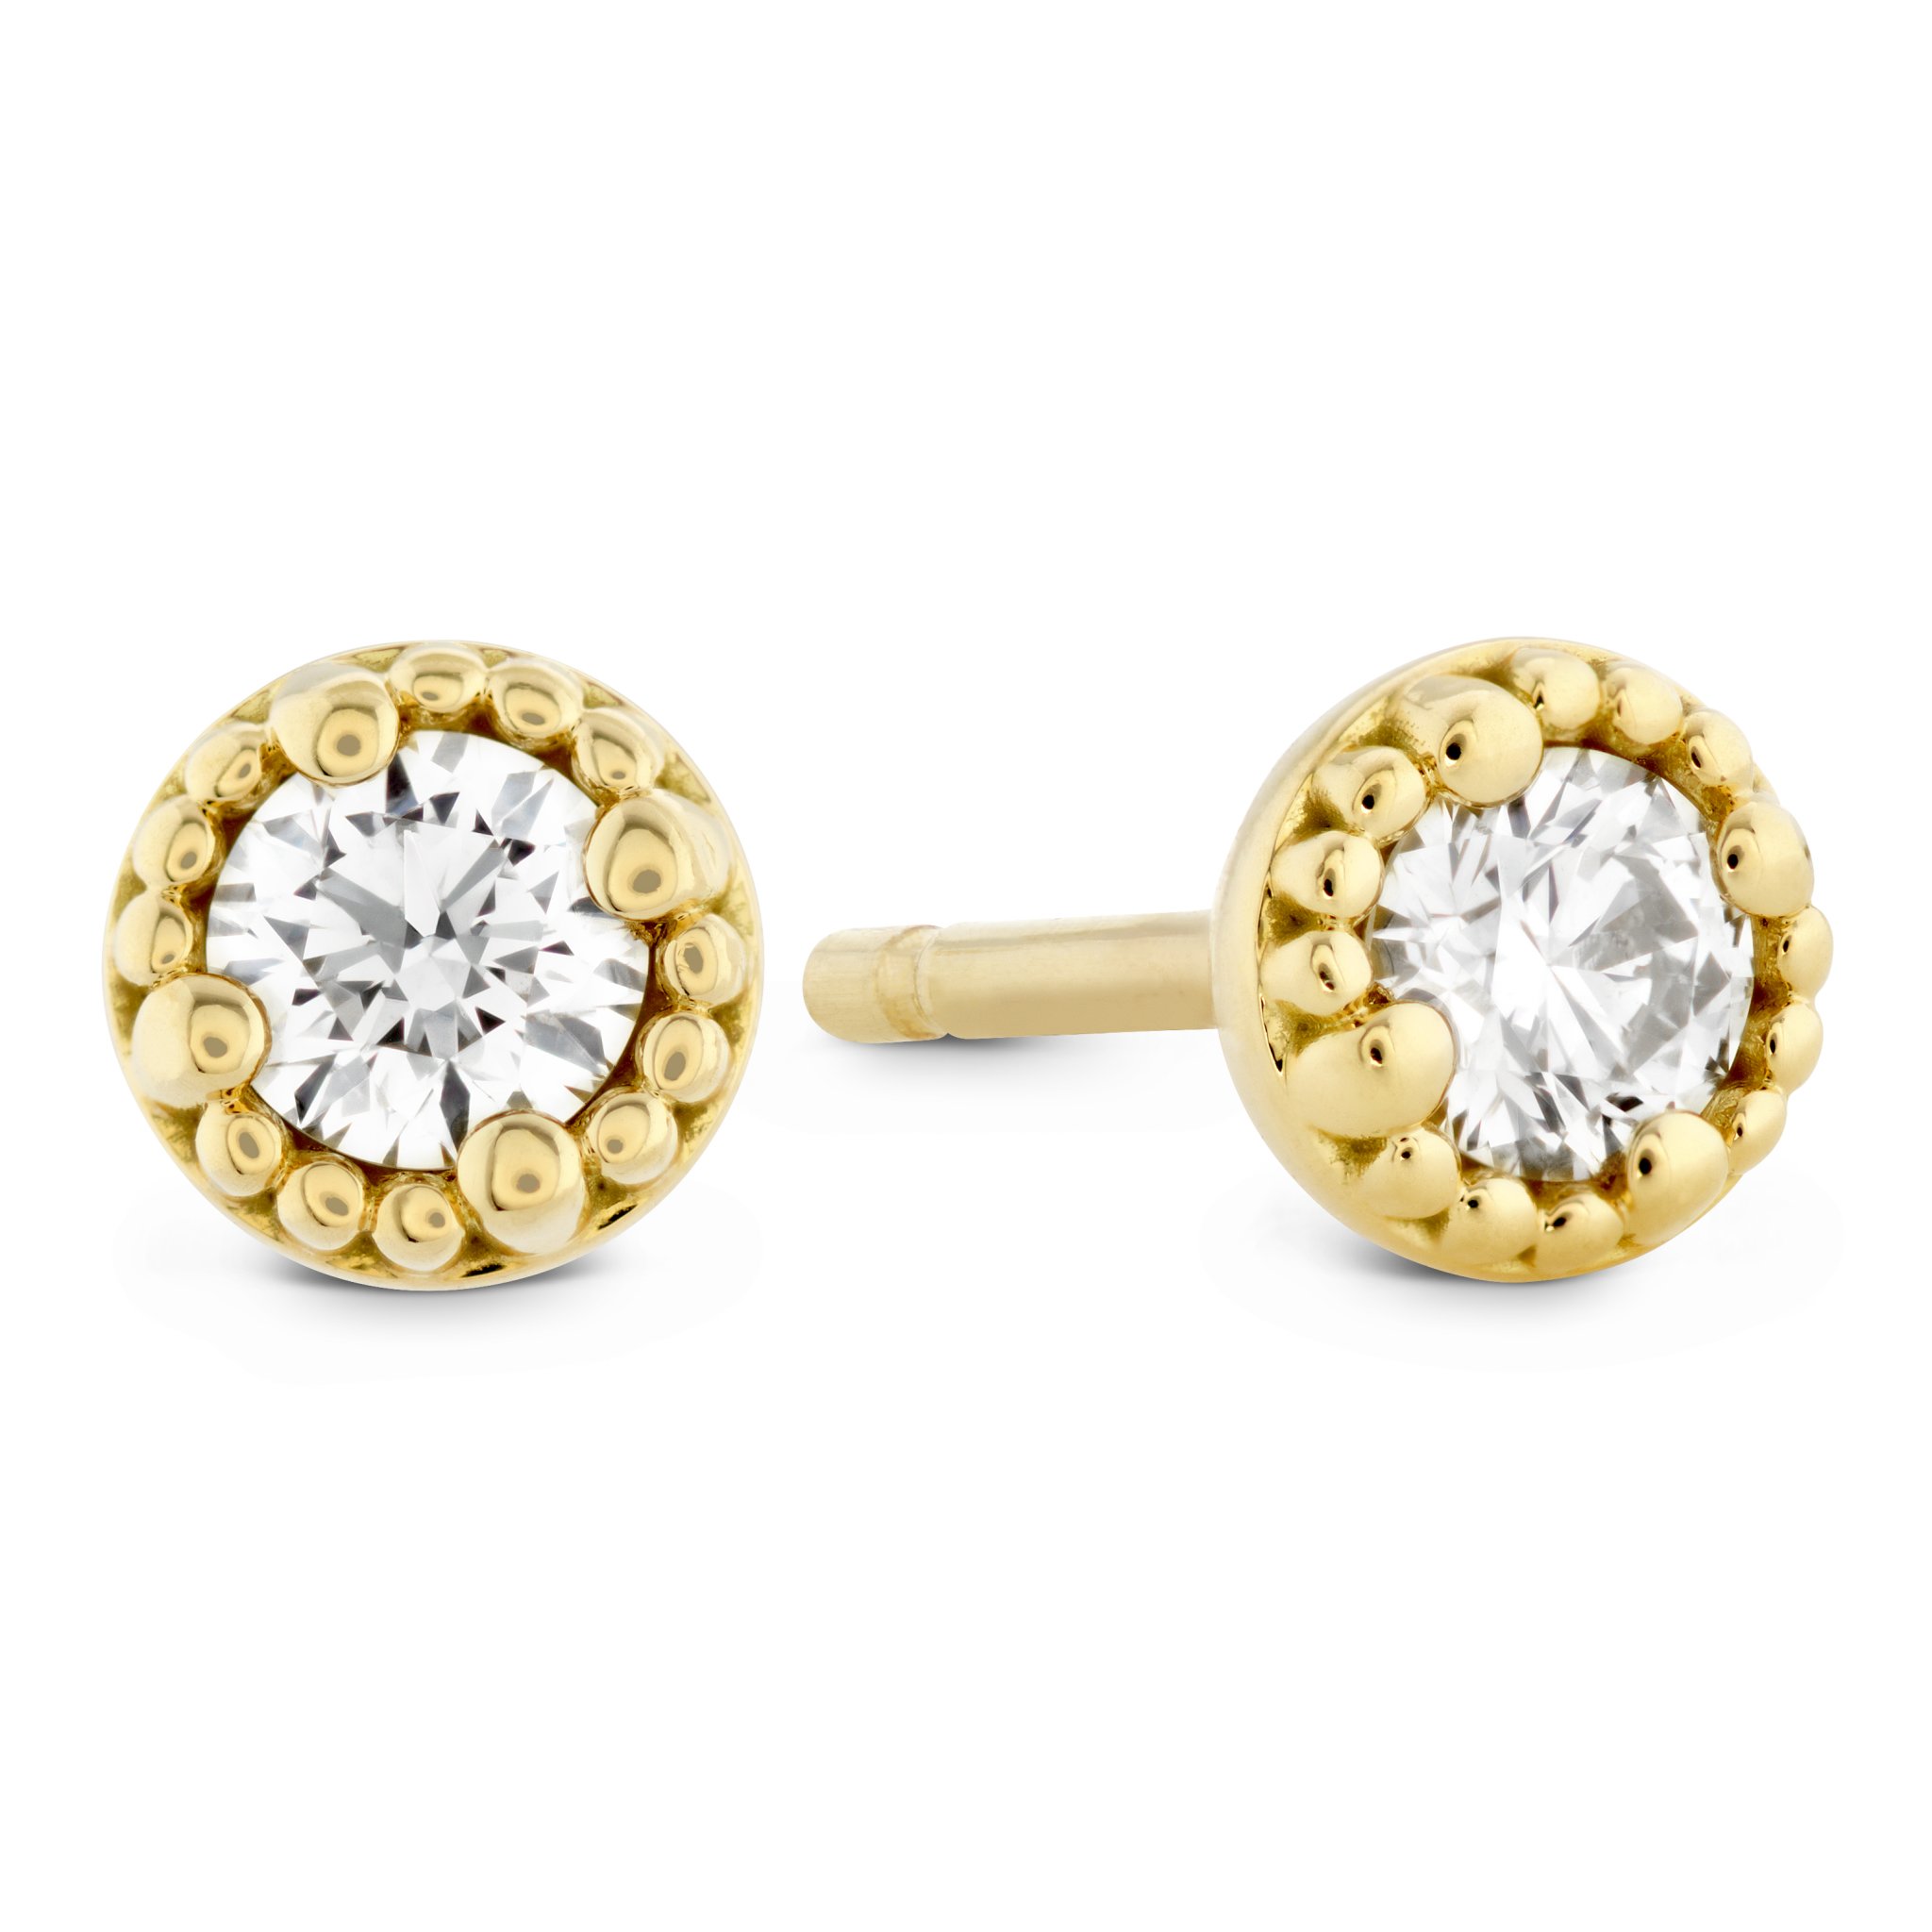 https://www.arthursjewelers.com/content/images/thumbs/Original/Liliana Milgrain Single Diamond Earrings_YELLOW-179452586.jpg